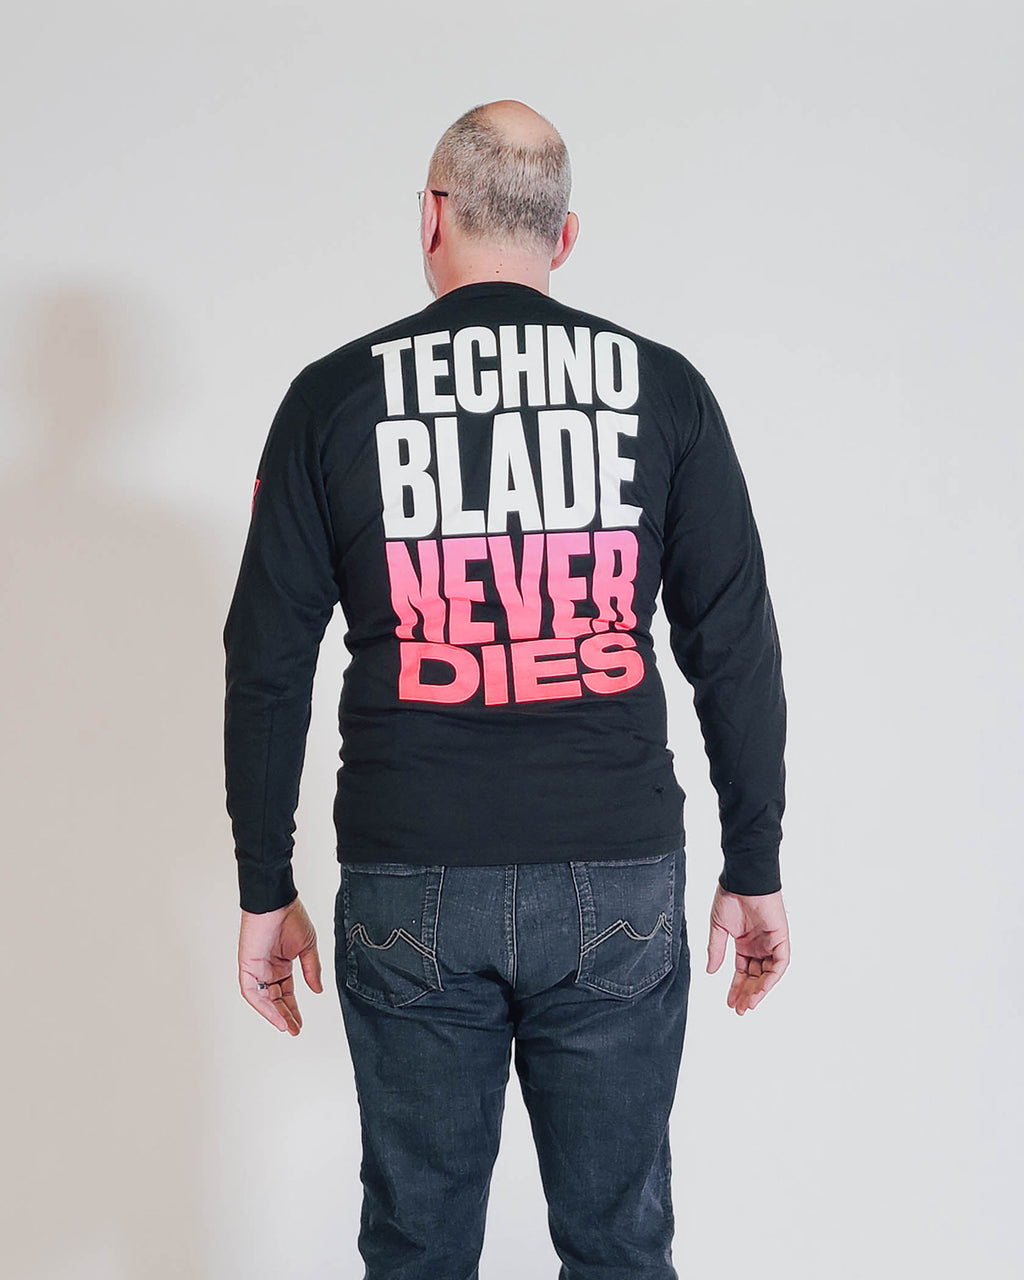 Technoblade Never Dies Cosplay Video Gamer Merch Black T-Shirt S-3XL